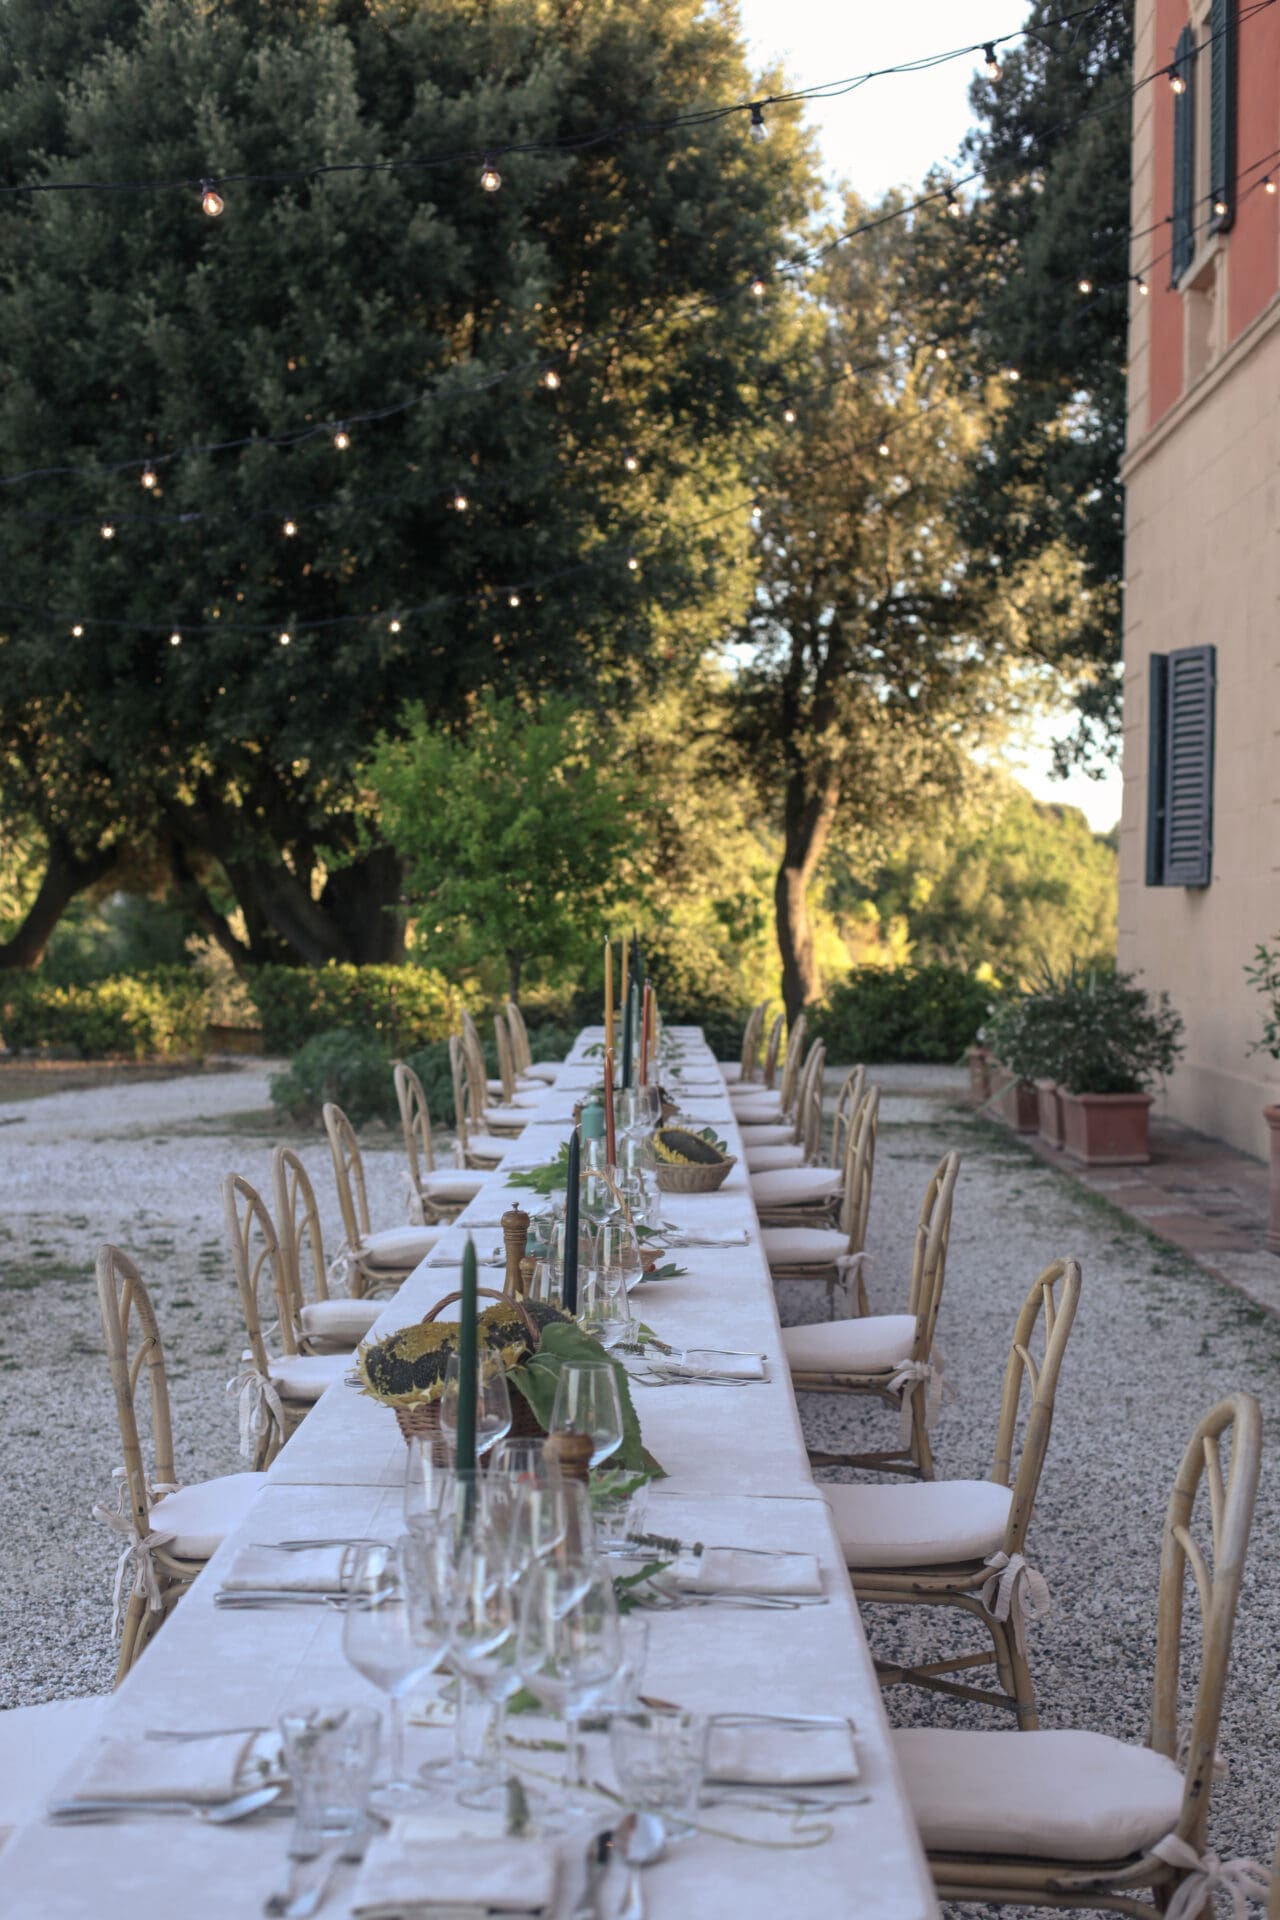 Inside Villa Lena | A long row of tables set up for an event at Villa Lena